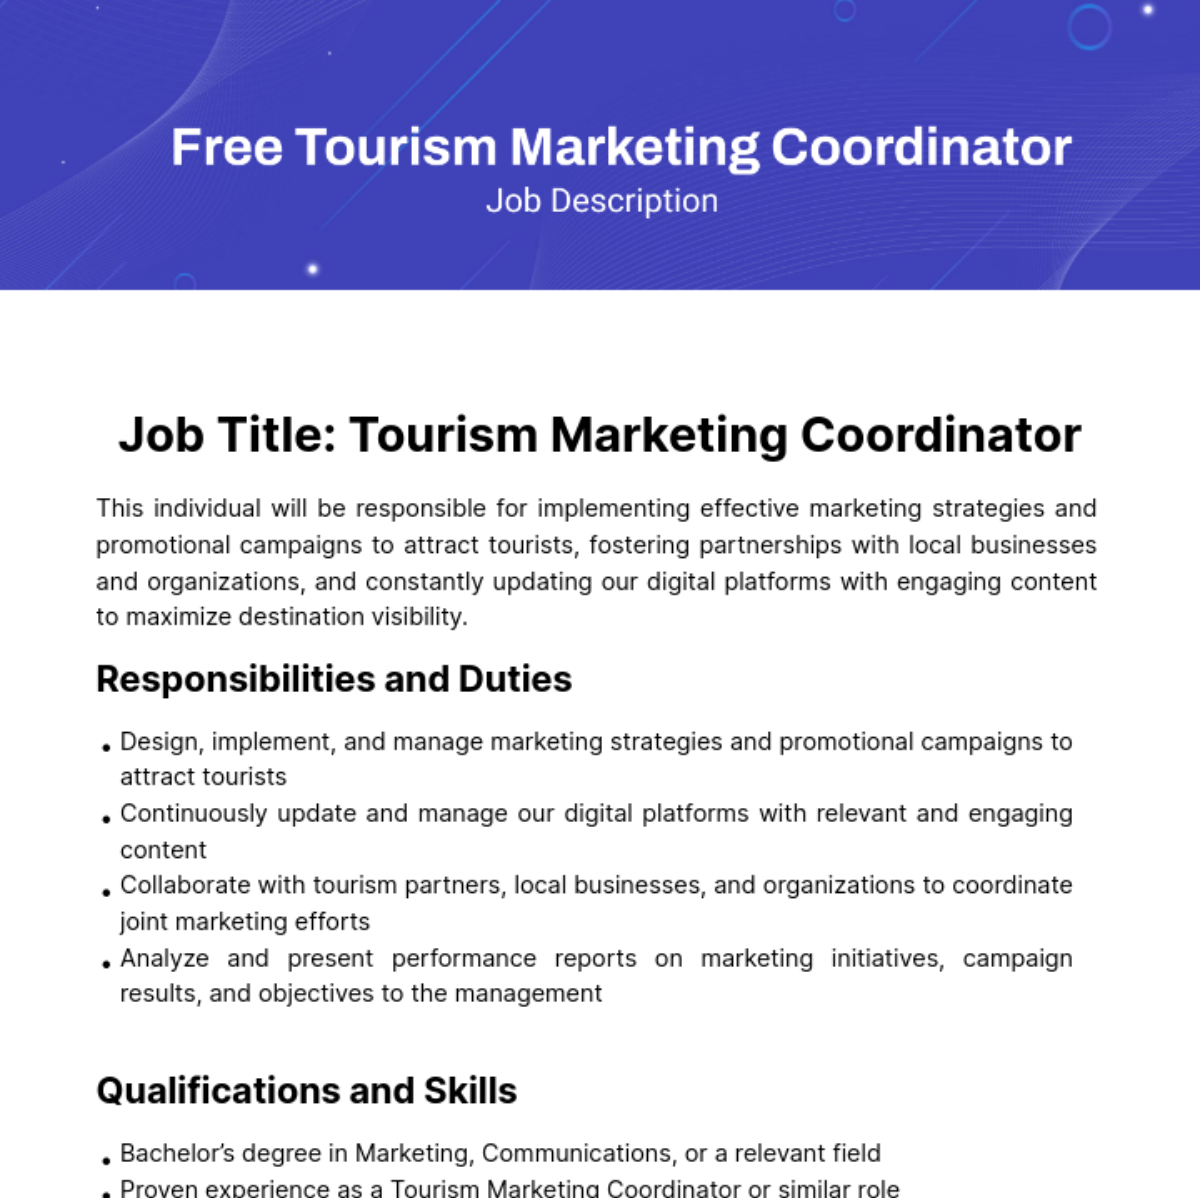 Free Tourism Marketing Coordinator Job Description Template